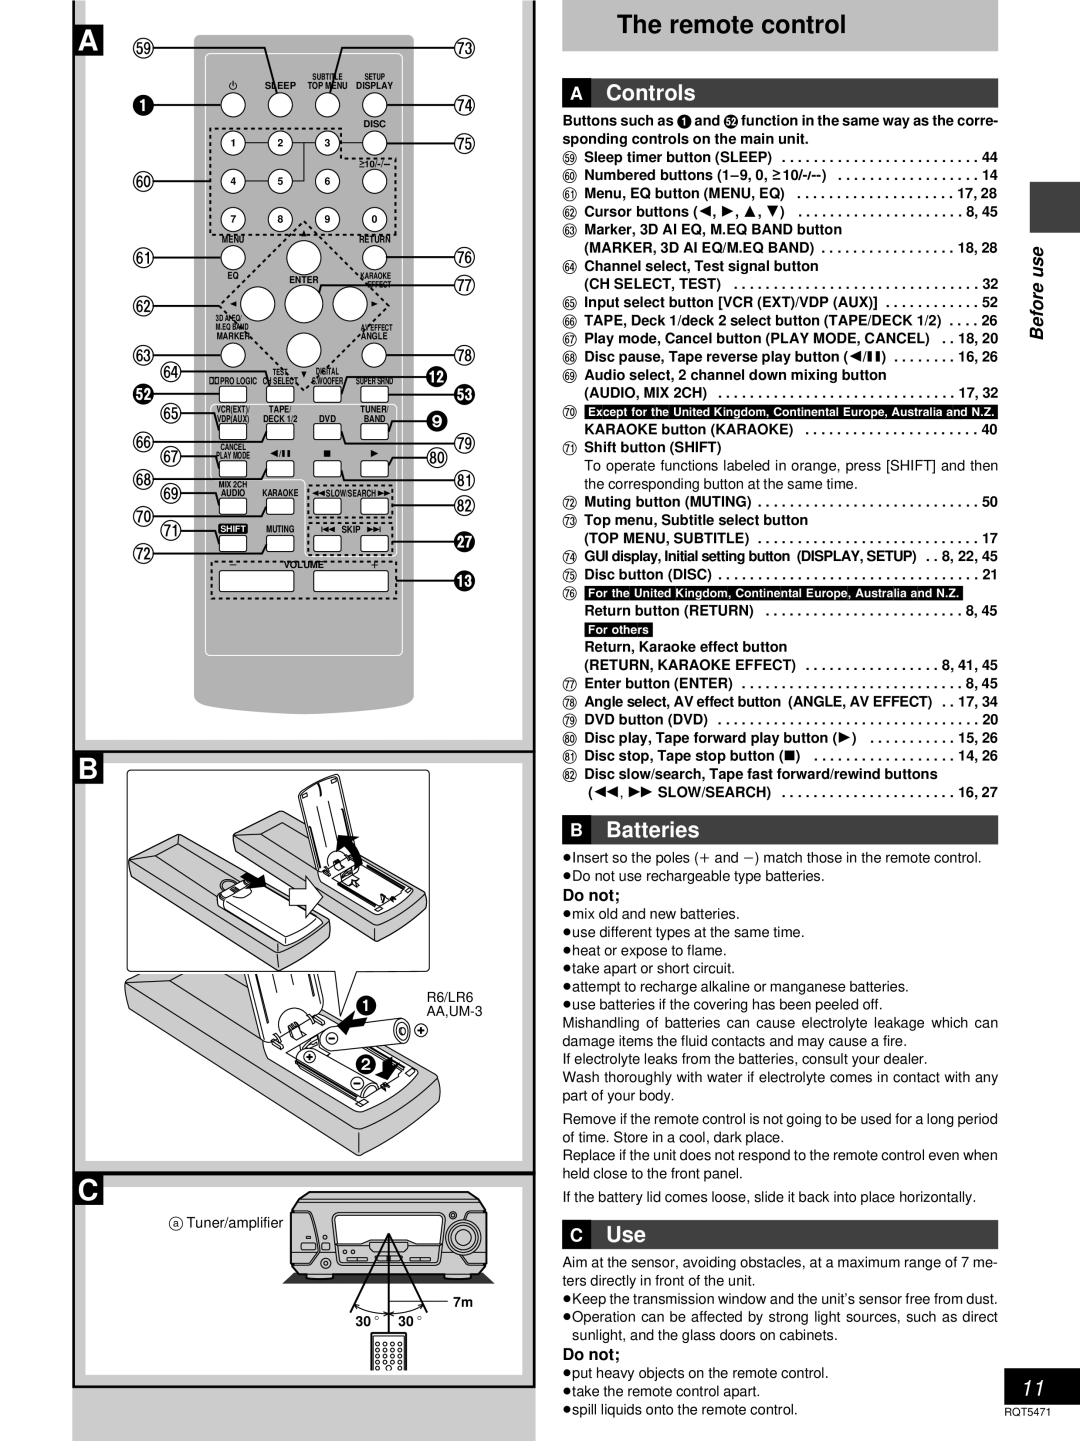 Technics SC-DV170 manual The remote control, »A Controls, »B Batteries, »C Use 